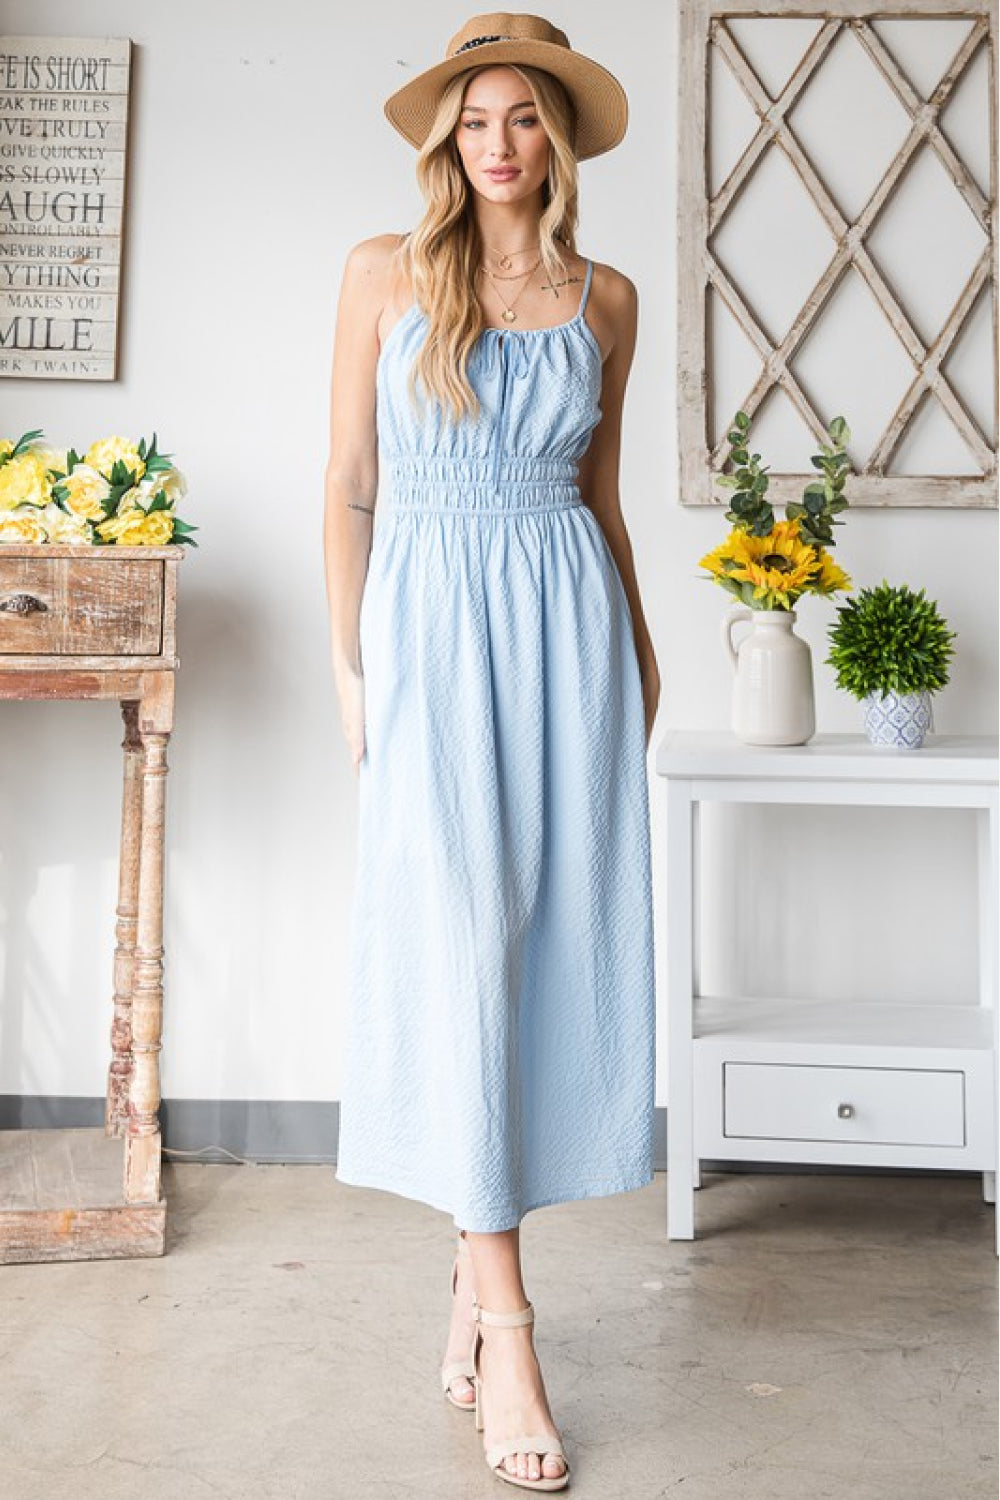 HEYSON French Riviera Textured Woven Sleeveless Dress